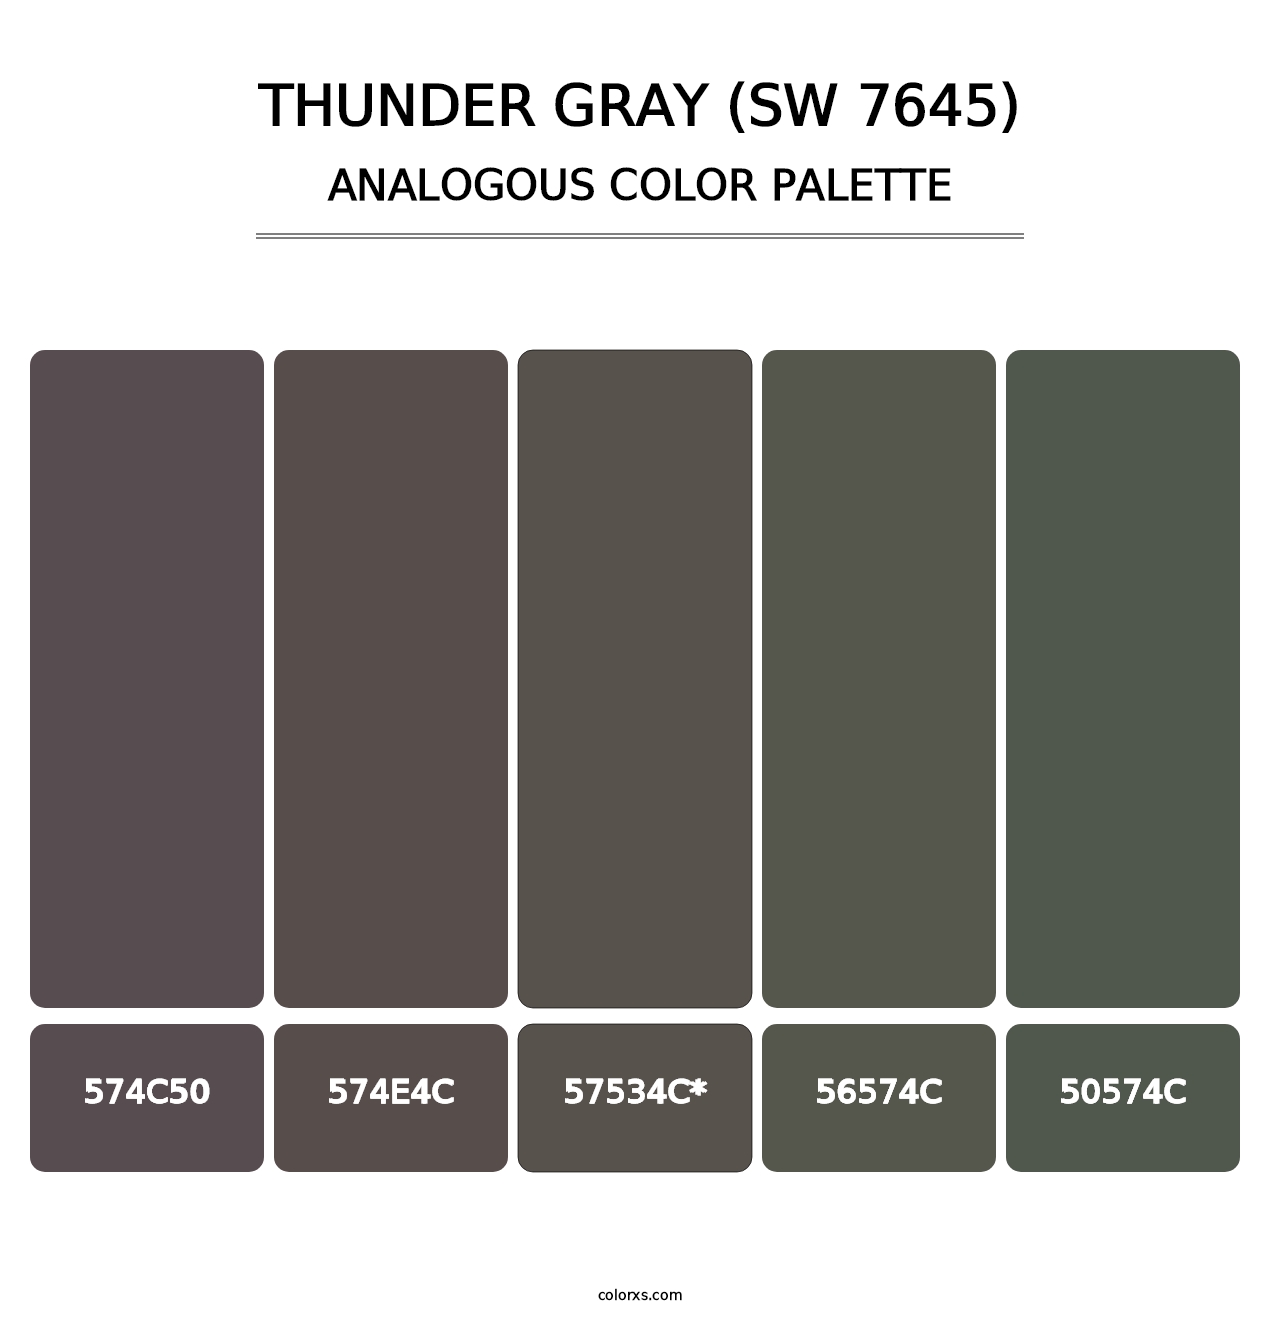 Thunder Gray (SW 7645) - Analogous Color Palette